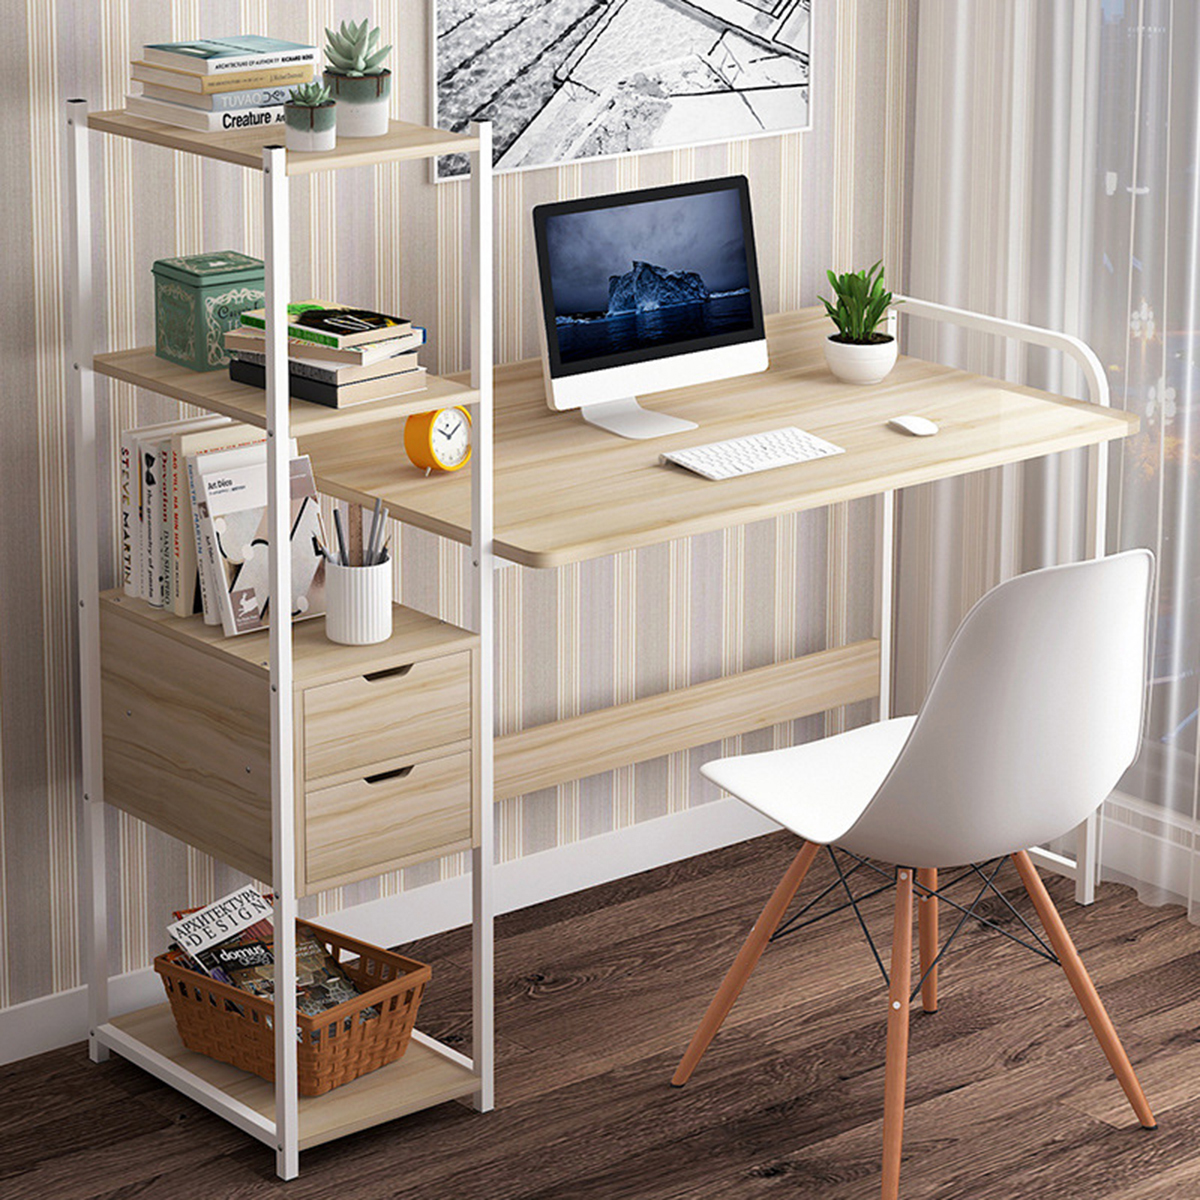 Computer-Laptop-Desk-Writing-Study-Table-Bookshelf-Desktop-Workstation-with-Storage-Shelf-Drawers-Ho-1747684-14